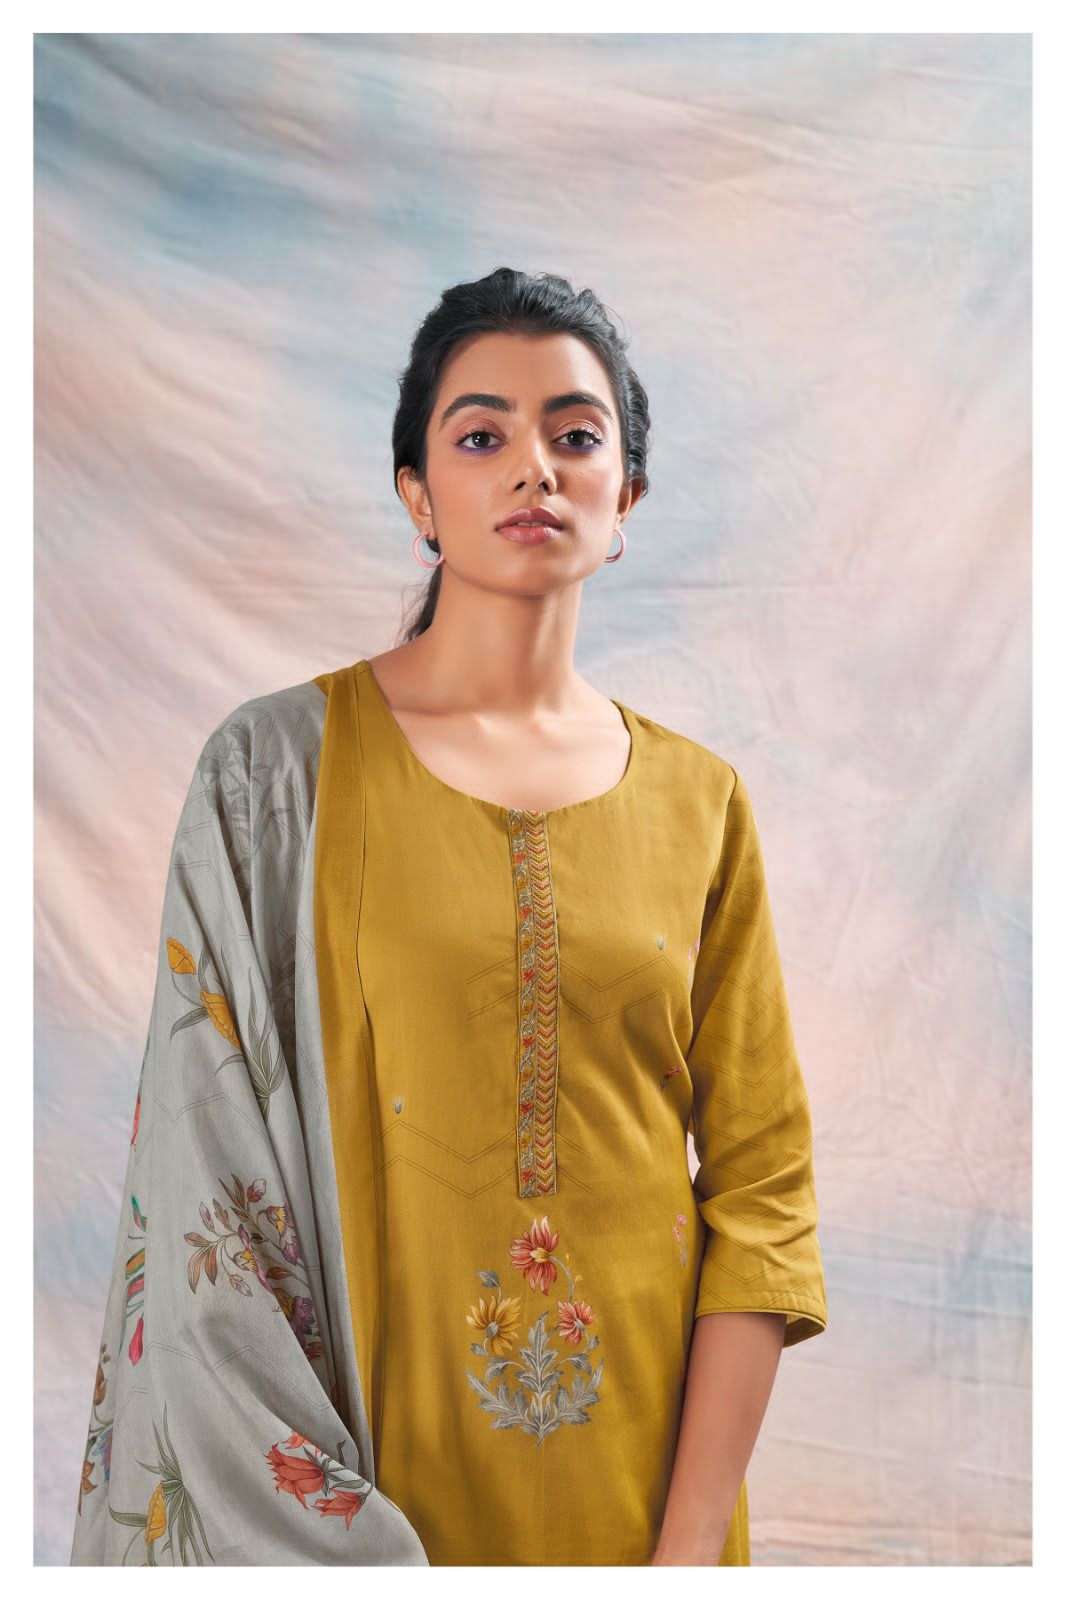 ganga robyn 1854 colours designer premium cotton salwar kameez 